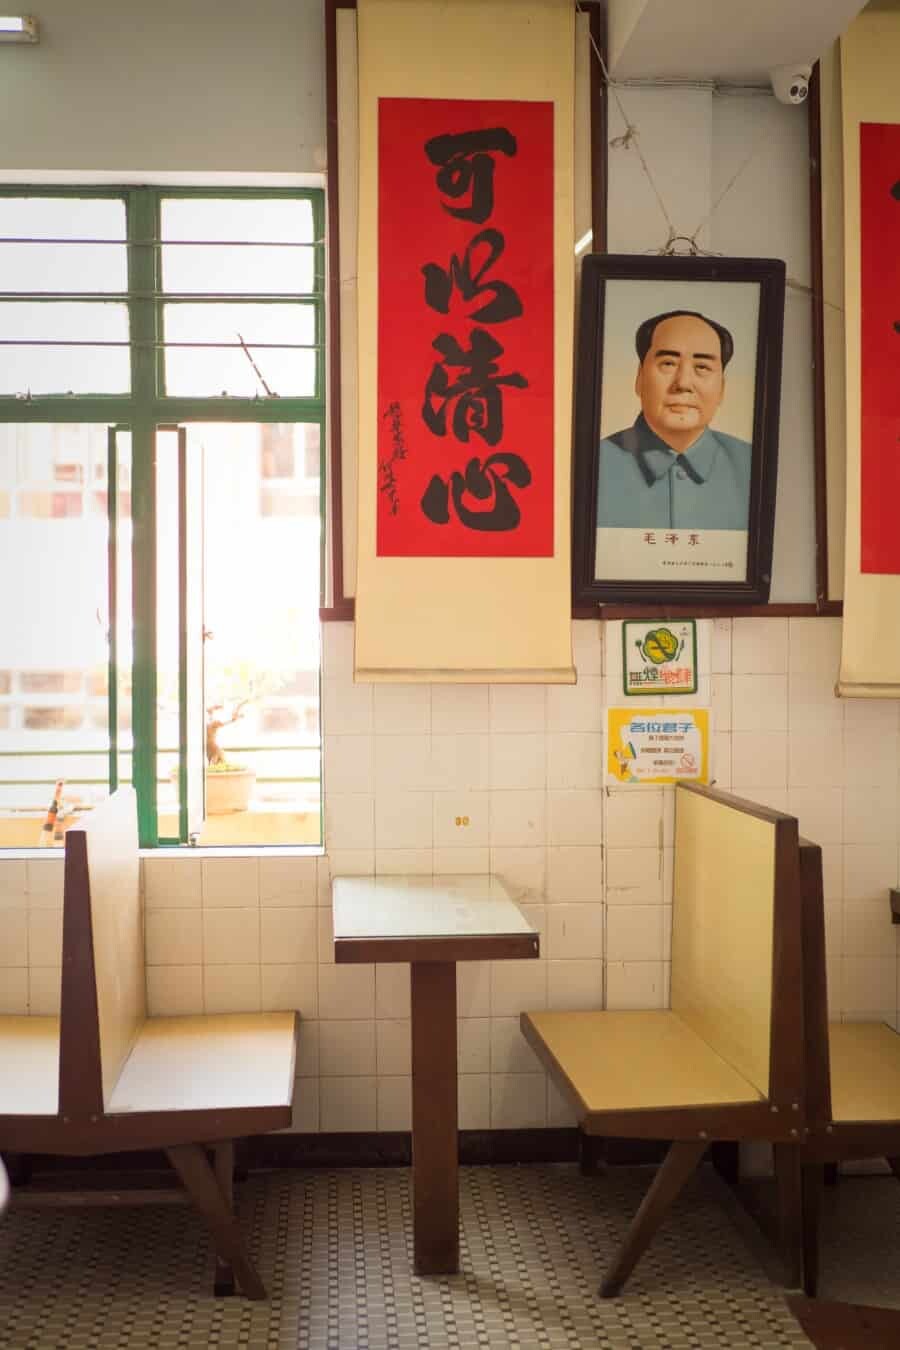 Long wa teahouse Macao - Macao photography and food locations